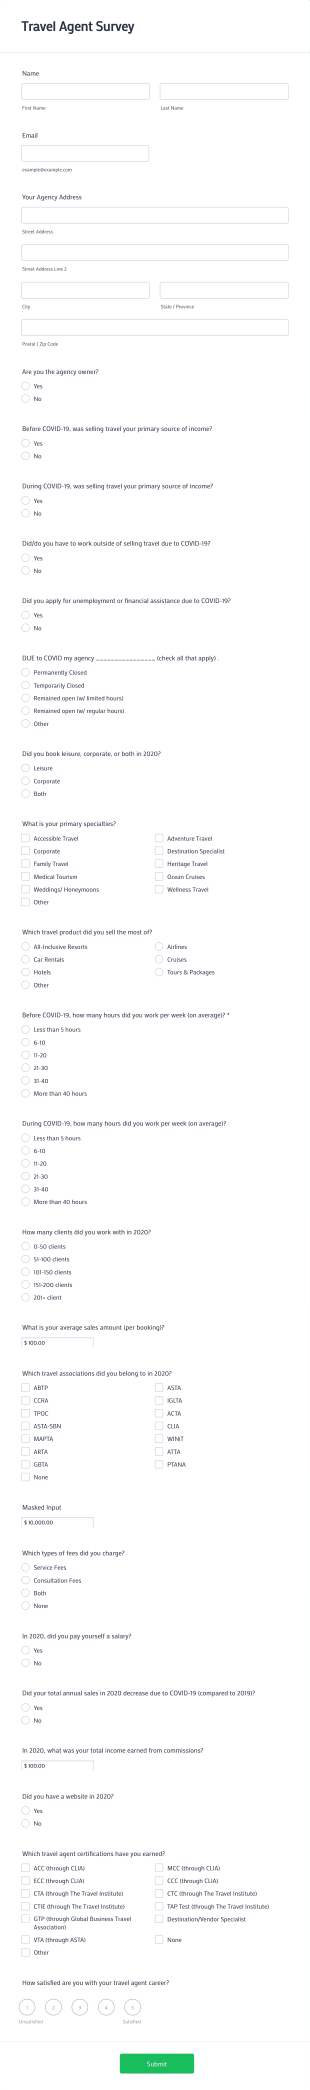 Travel Agent Survey Form Template